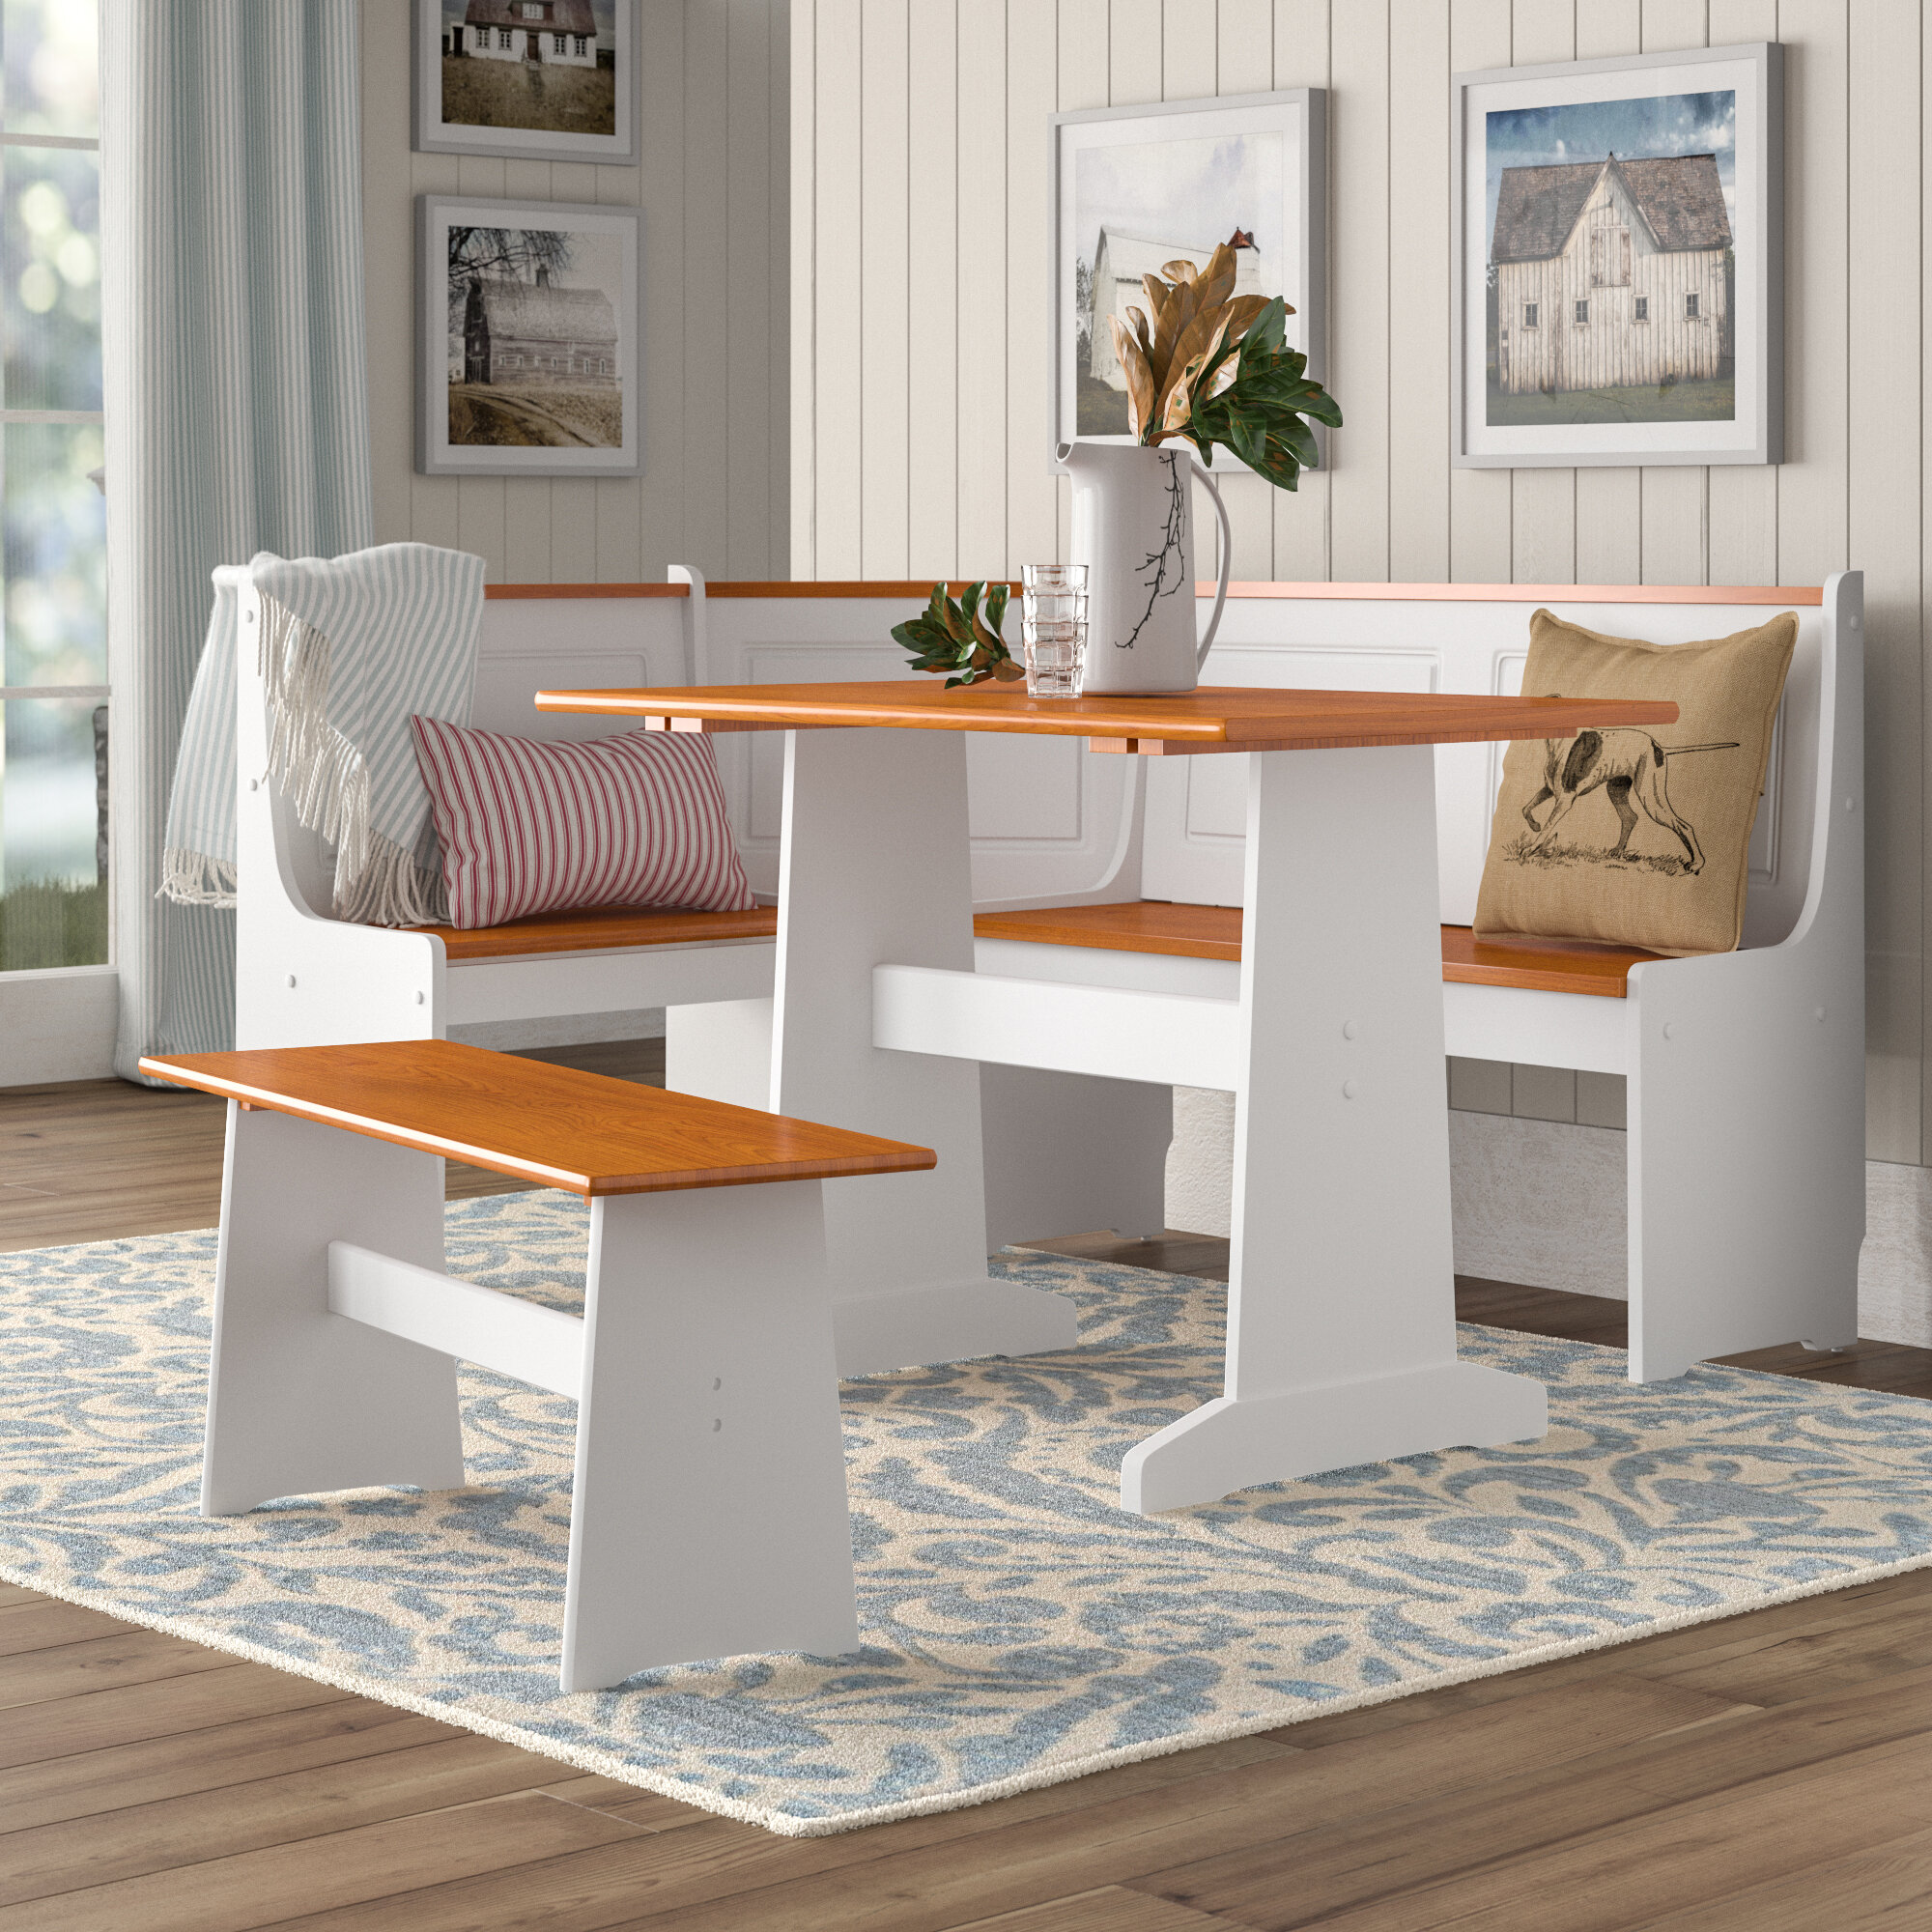 Unique Adjustable Designed Bedside Table for Eating Crafting Reading & More for sale online 